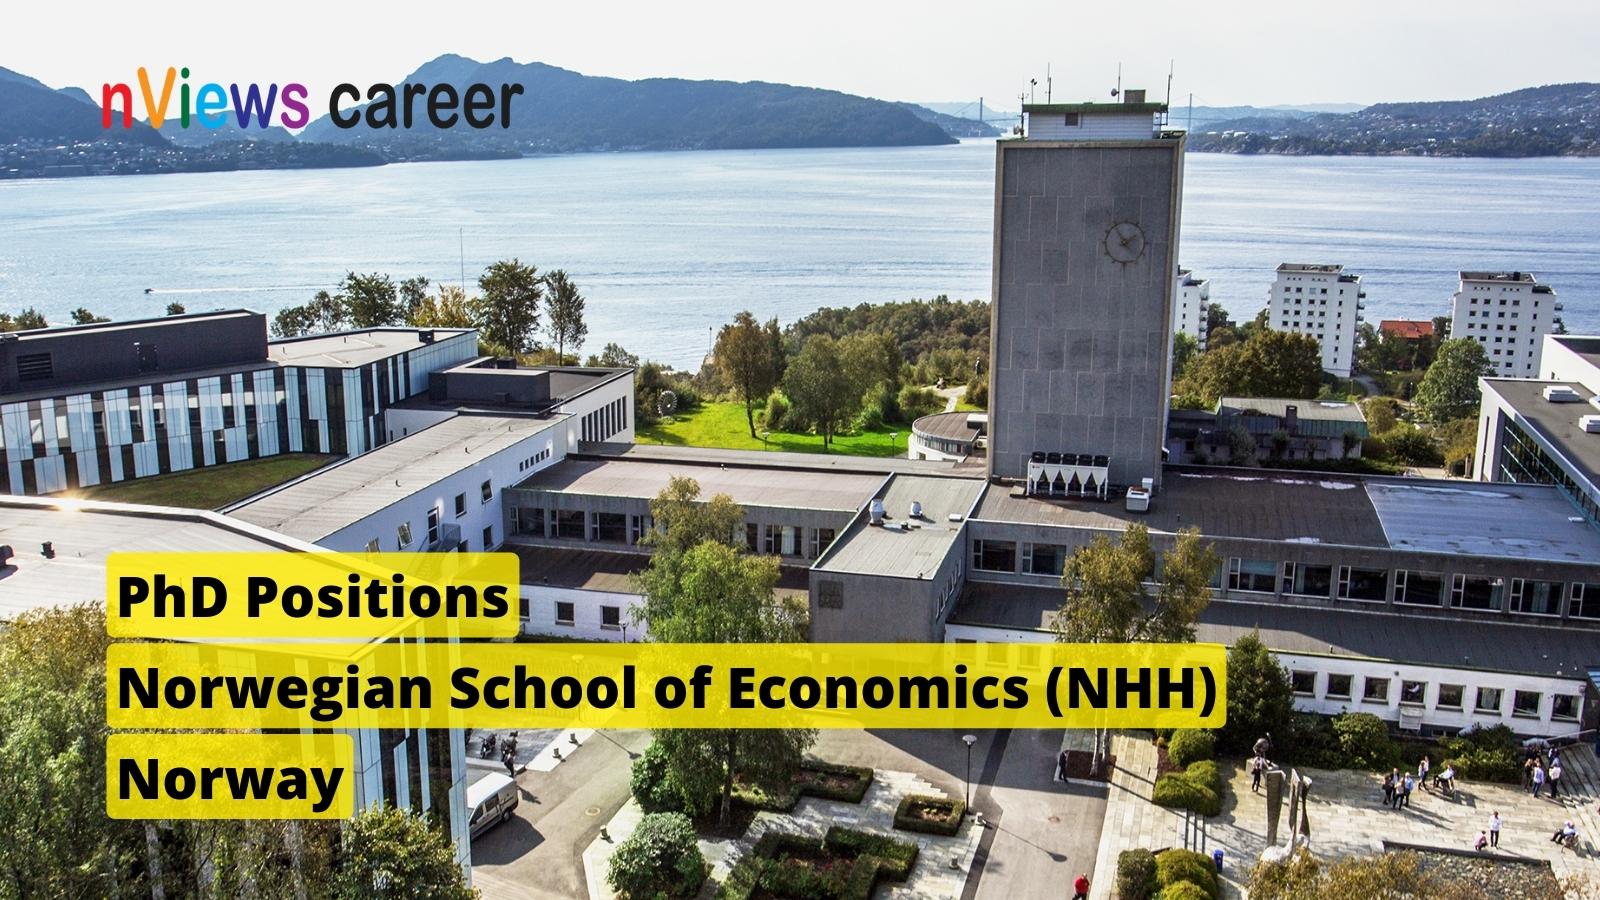 PhD Positions at NHH Norwegian School of Economics - campus view